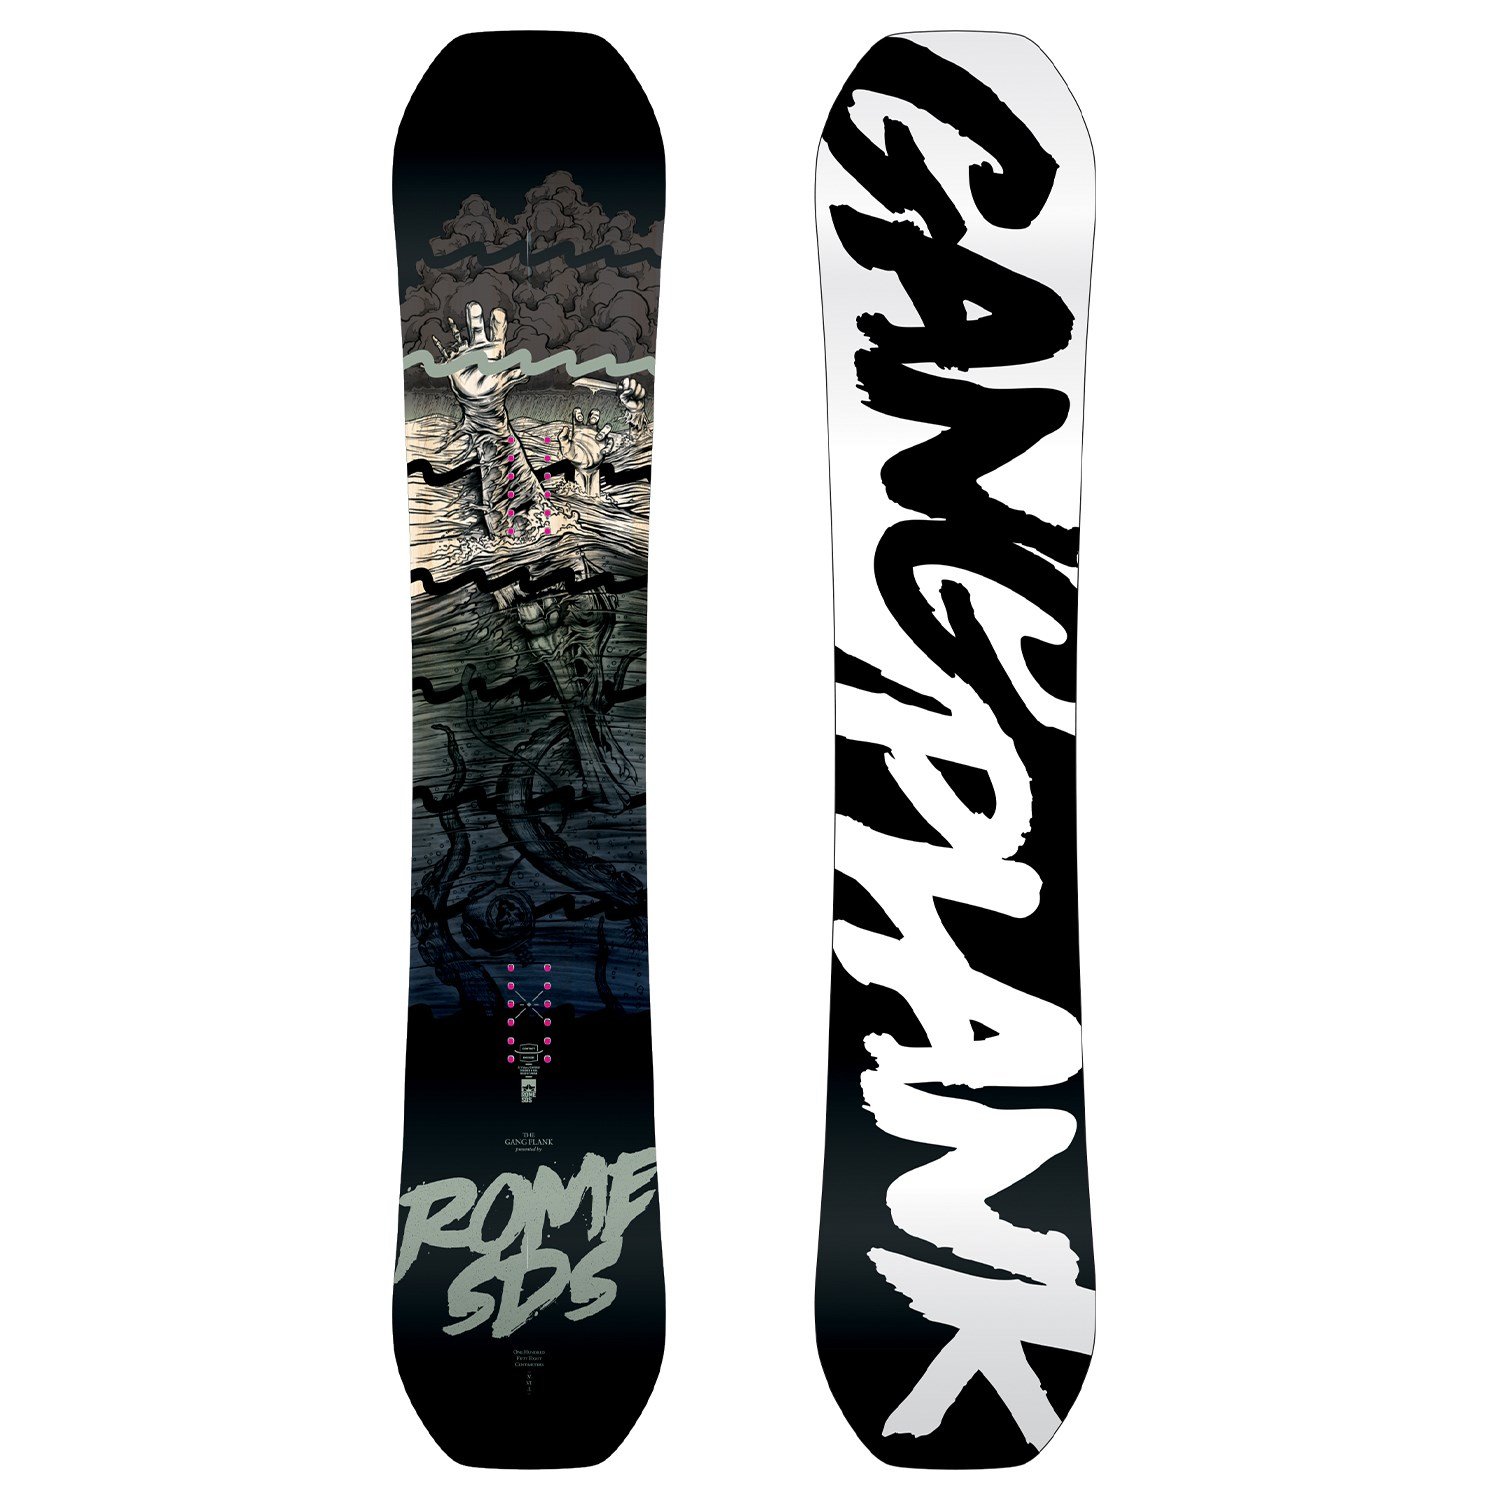 https://images.evo.com/imgp/zoom/161485/646918/rome-gang-plank-snowboard-2020-.jpg